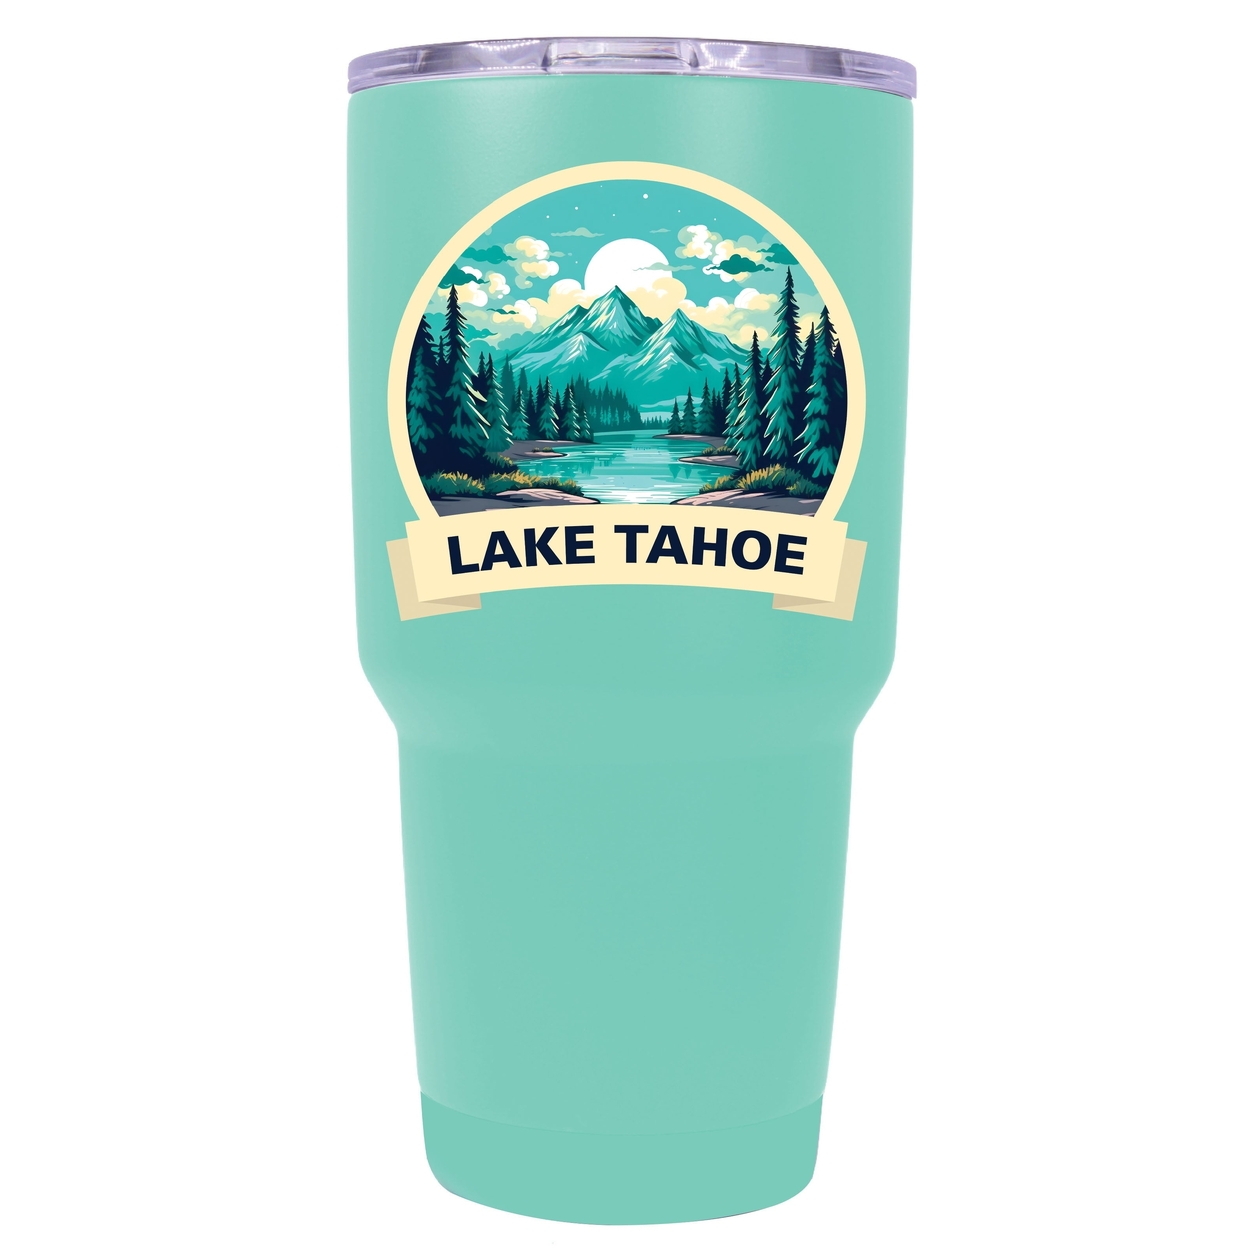 Lake Tahoe California Souvenir 24 Oz Insulated Stainless Steel Tumbler - Green,,2-Pack